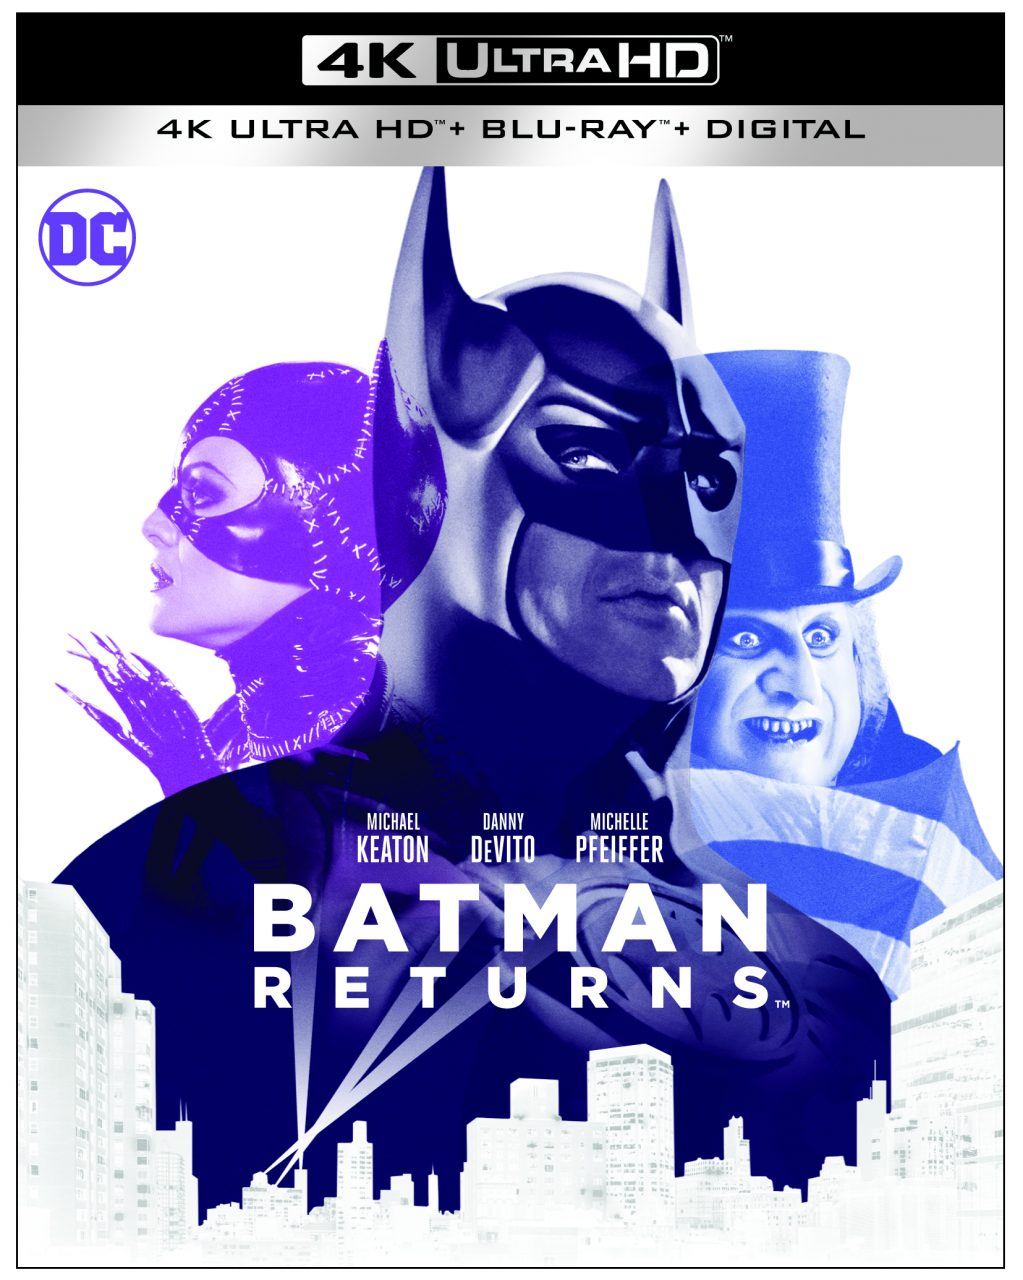 Batman Returns 4K Ultra HD cover (Warner Bros. Home Entertainment)